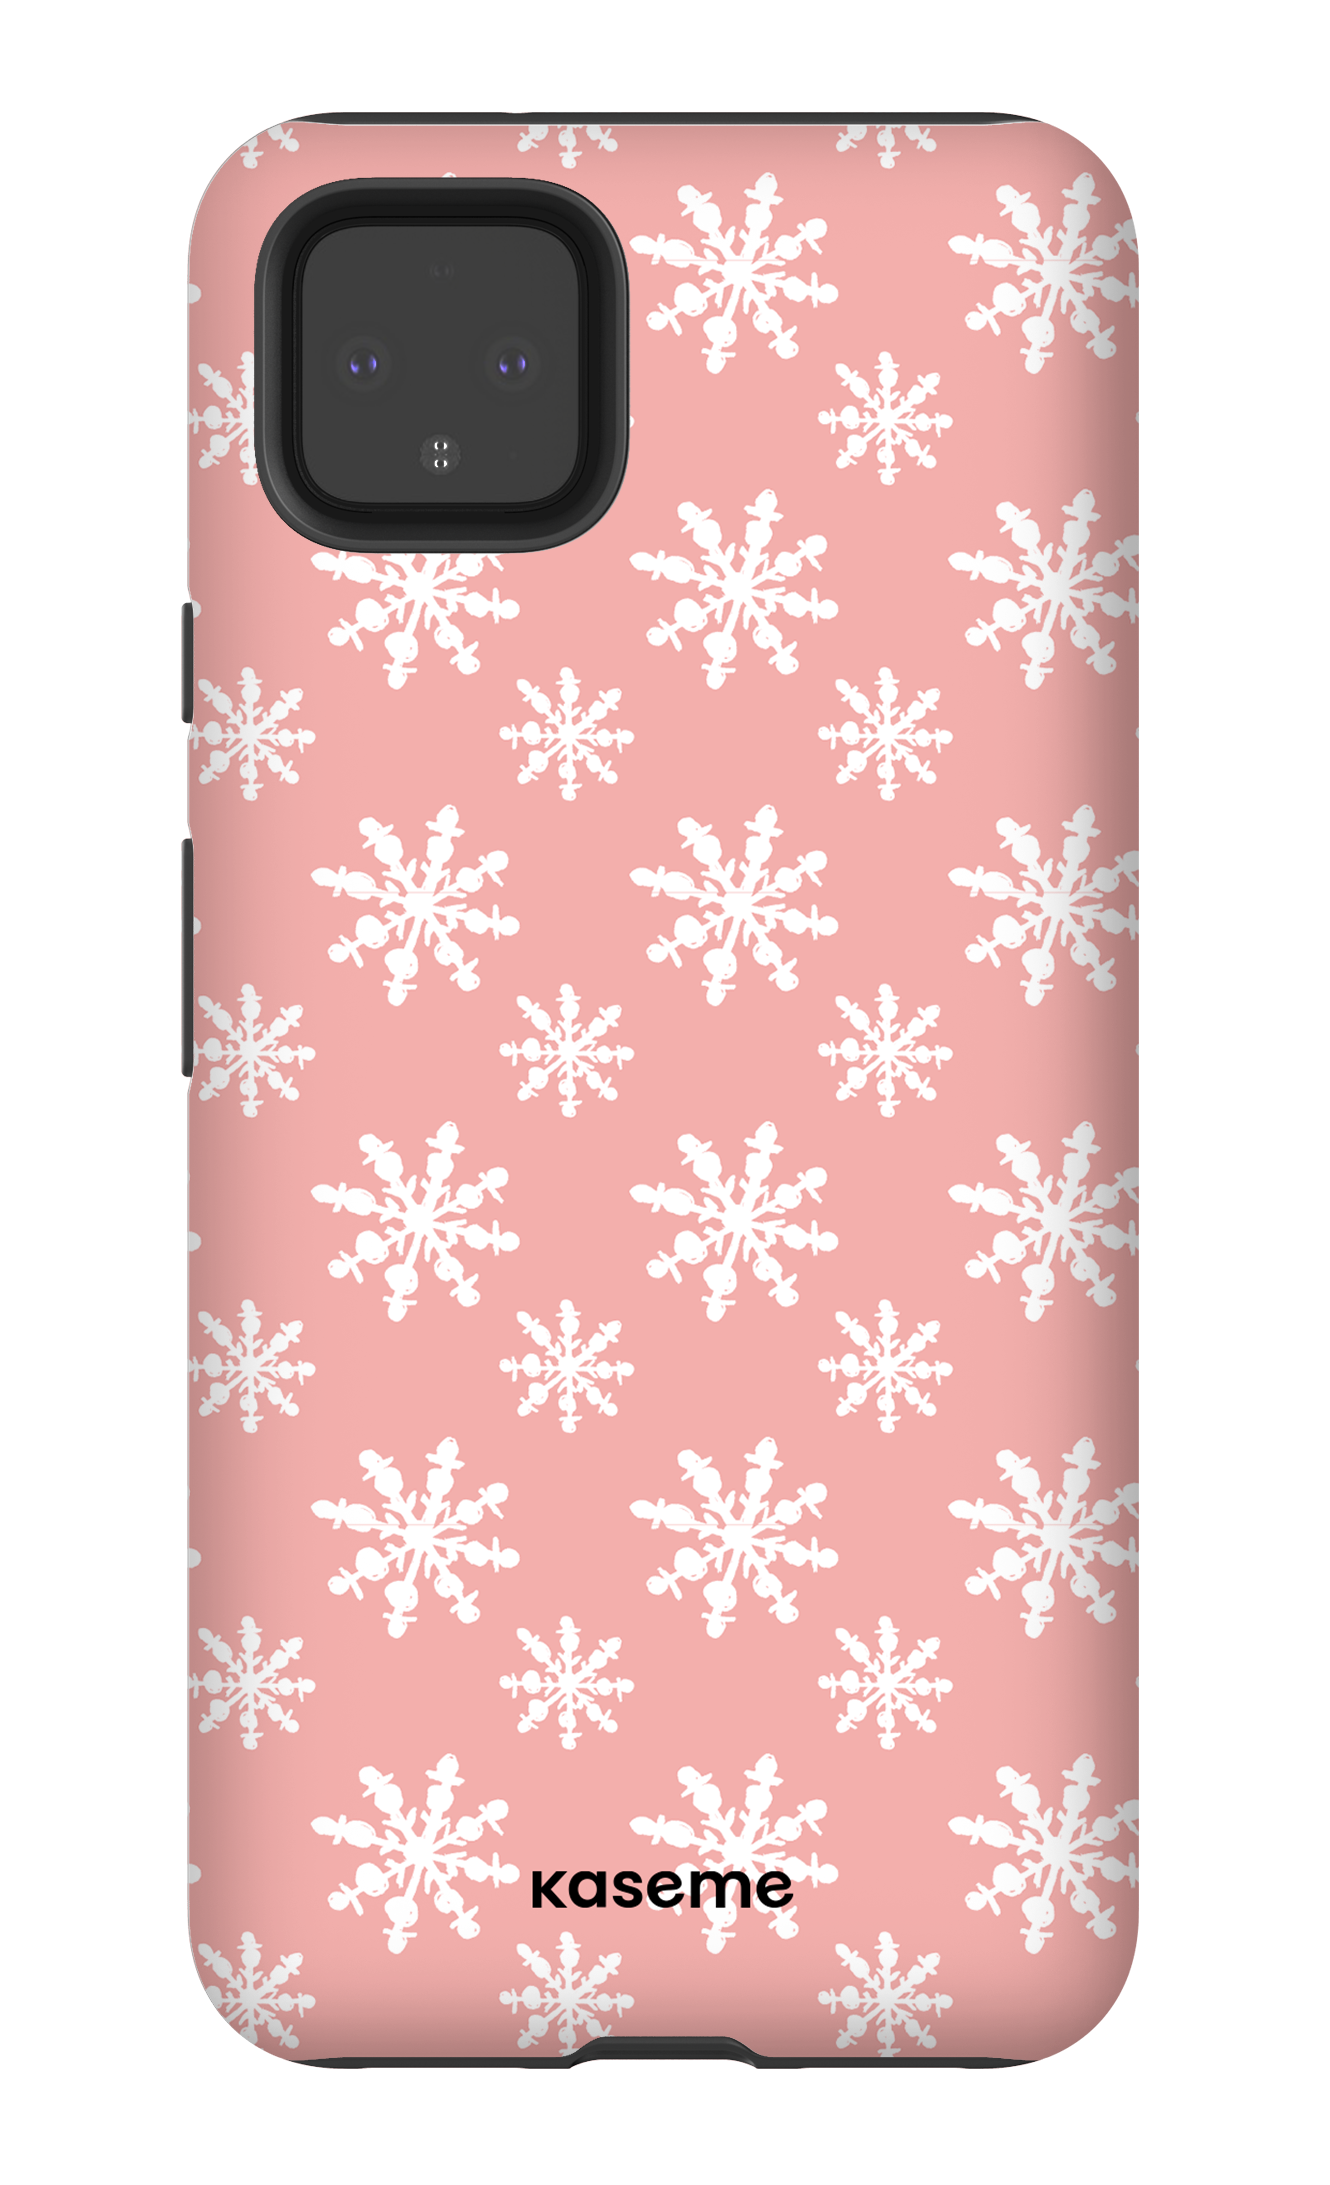 Snowy Serenity pink - Google Pixel 4 XL